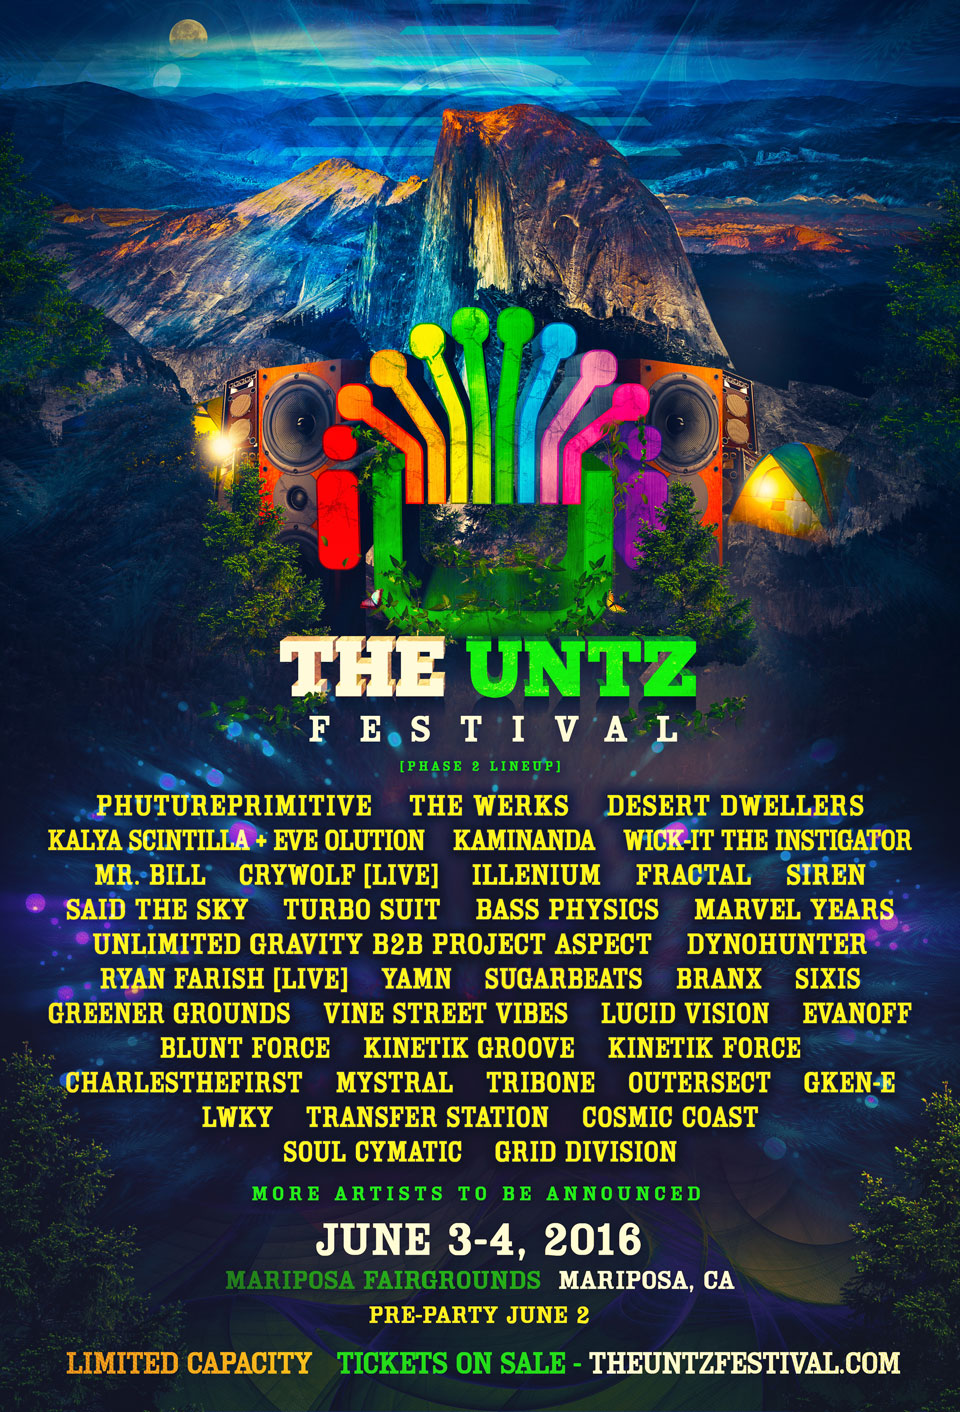 The Untz Festival Phase2